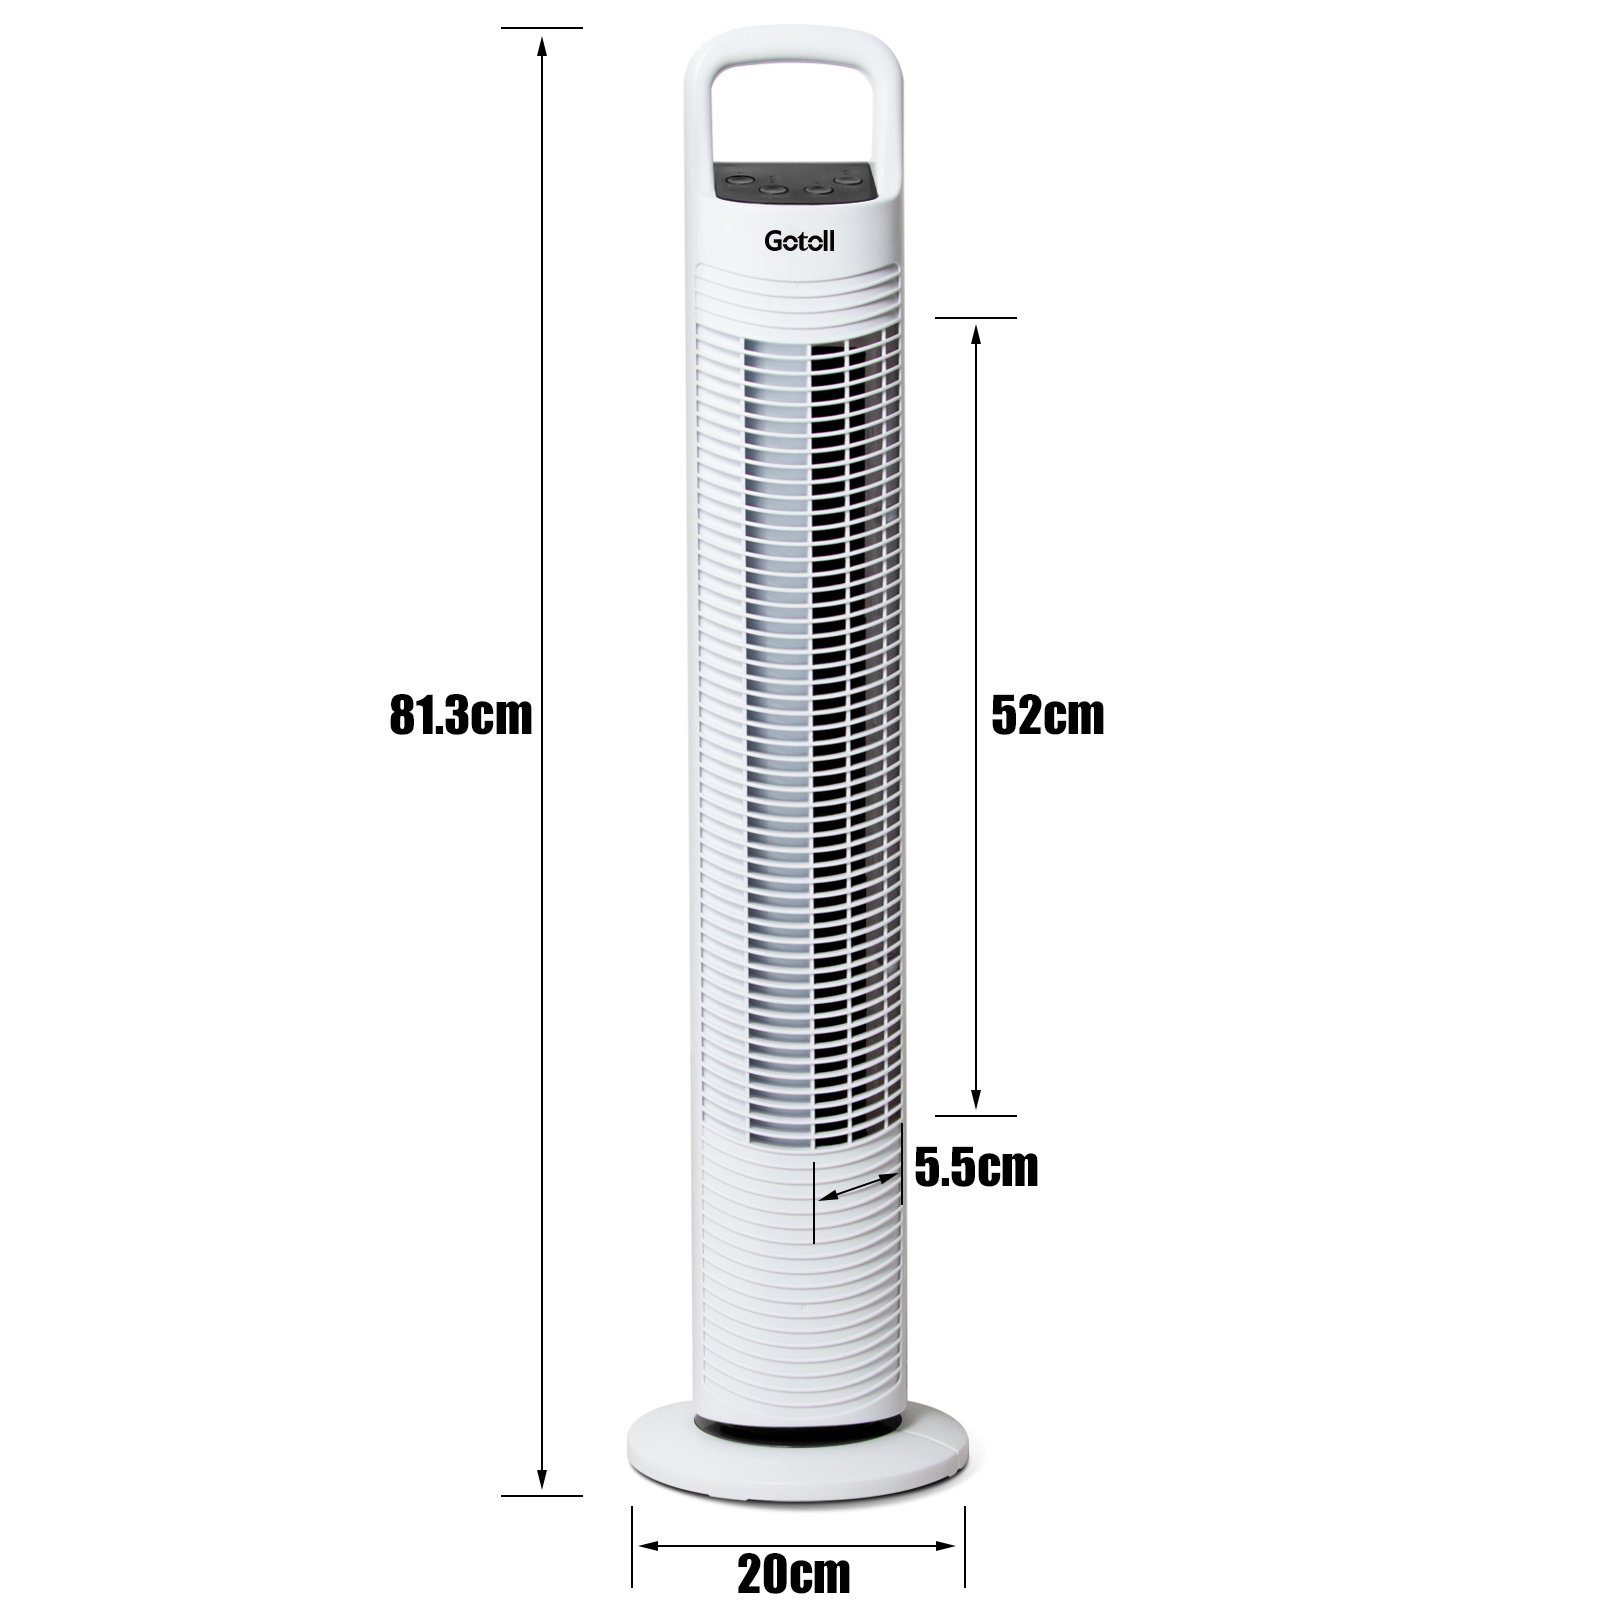 Leise mit 81.3cm Fernbedienung Turmventilator 70° GL302R, Säulenventilator Gotoll Towerventilator